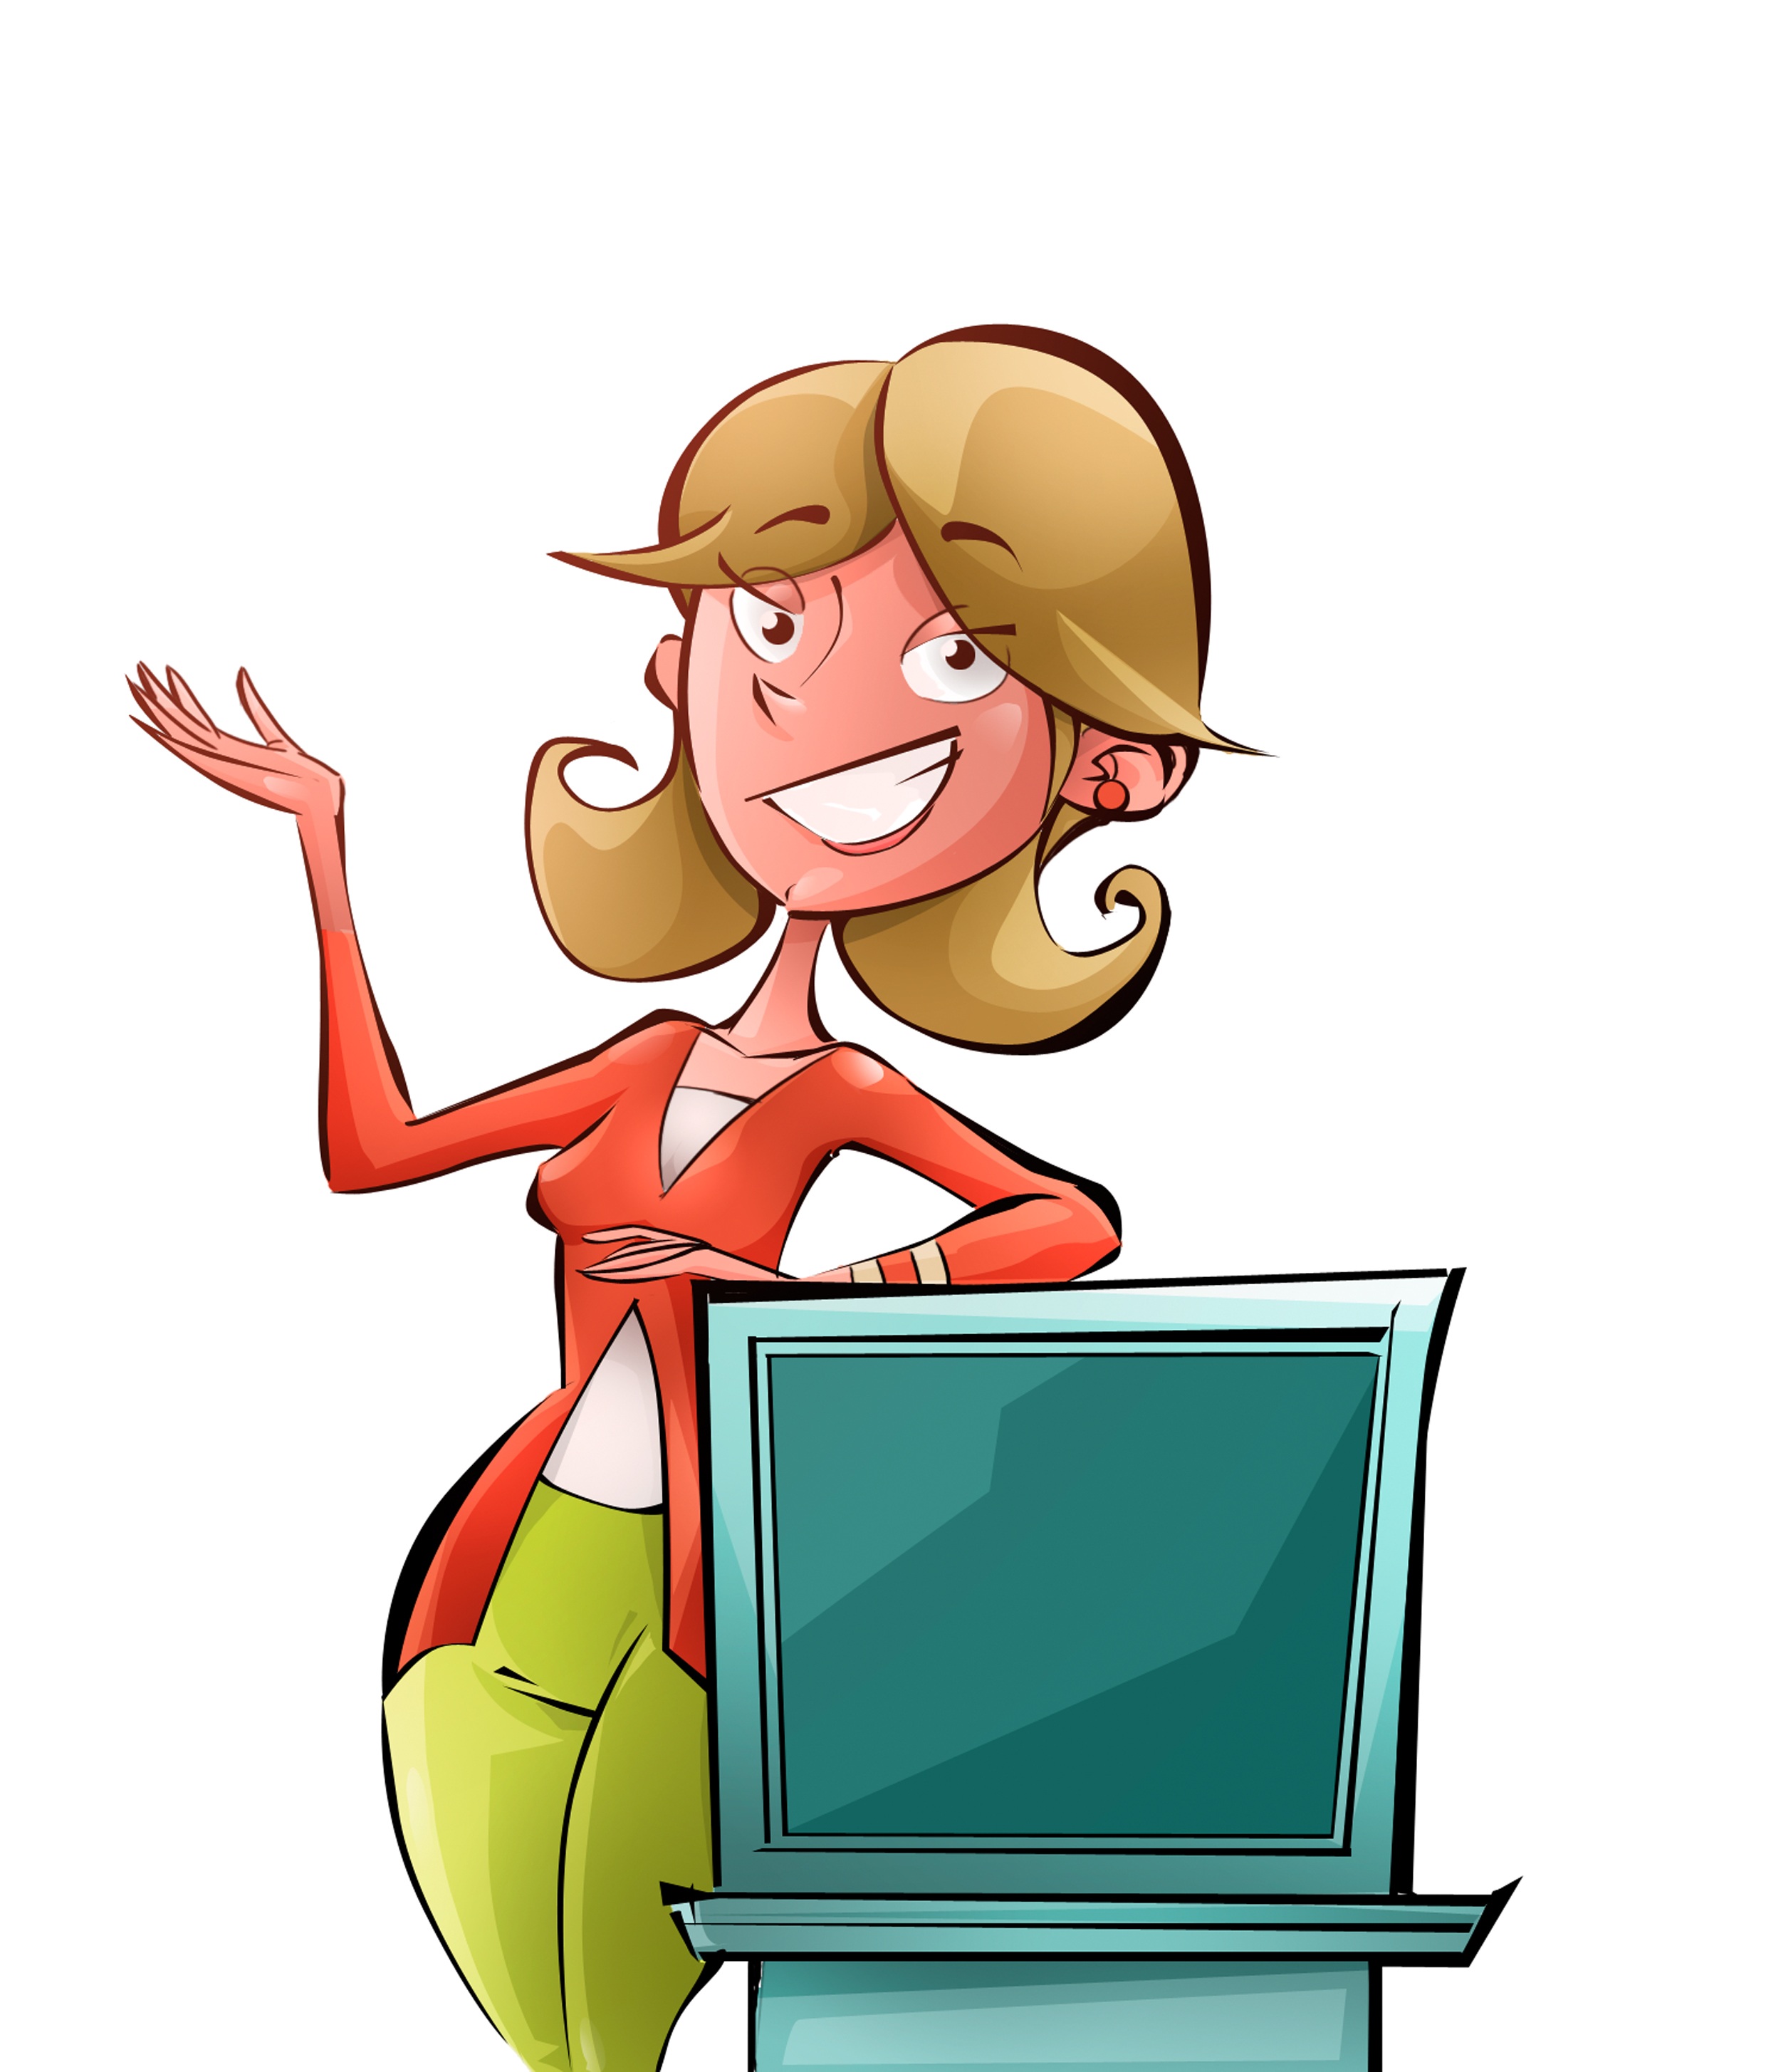 Businesswoman cartoon drawing free image download